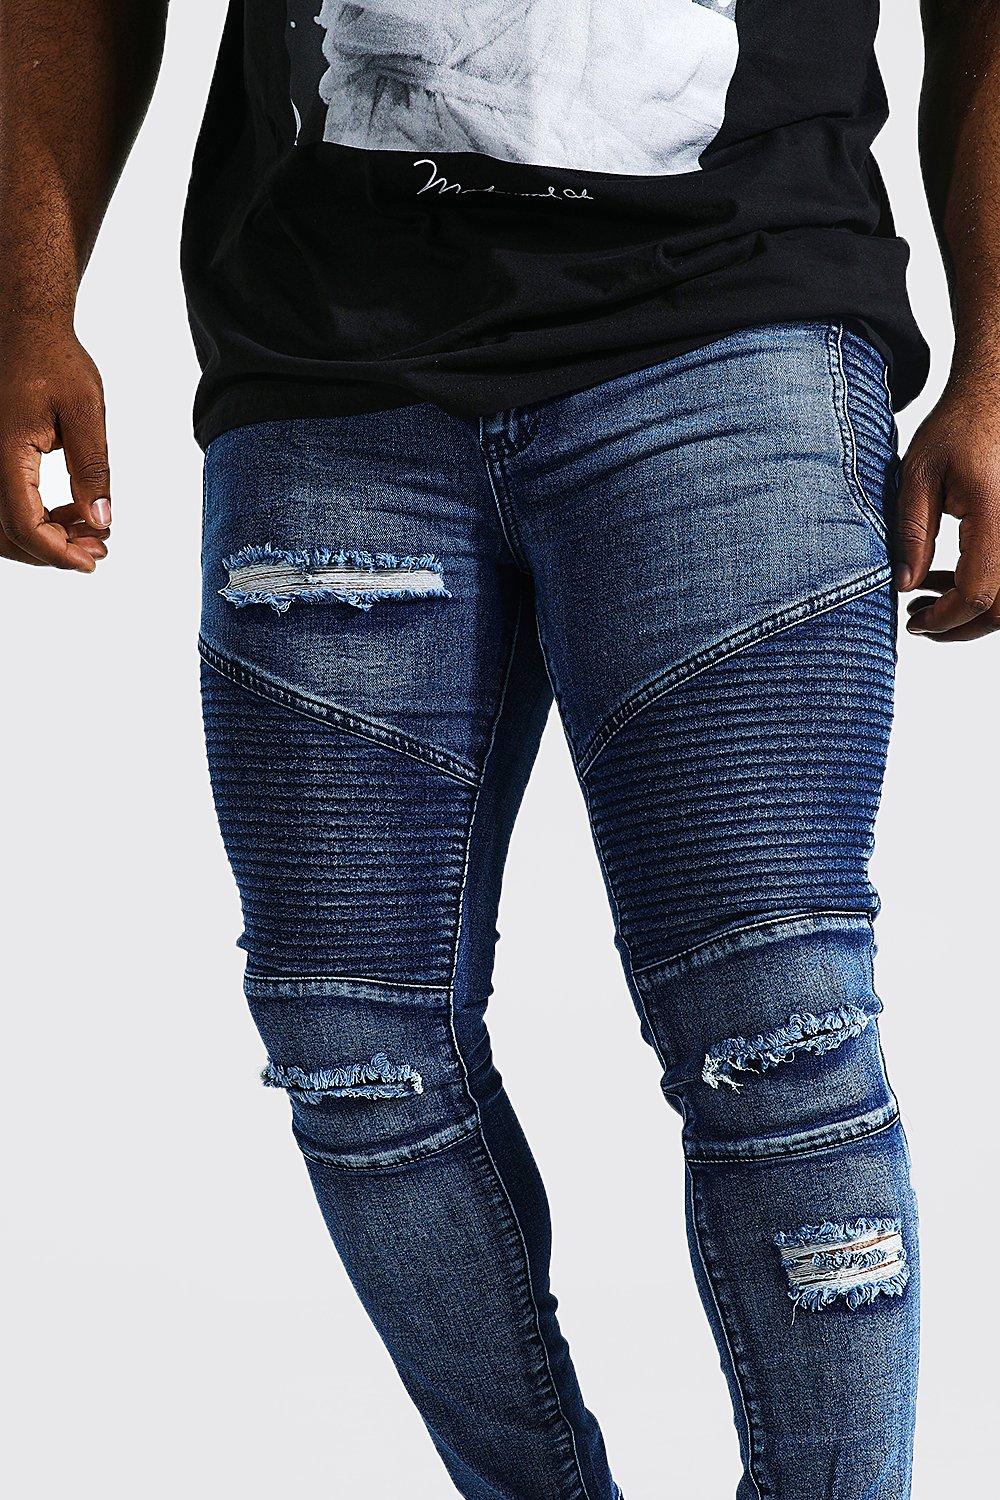 mens big and tall biker jeans